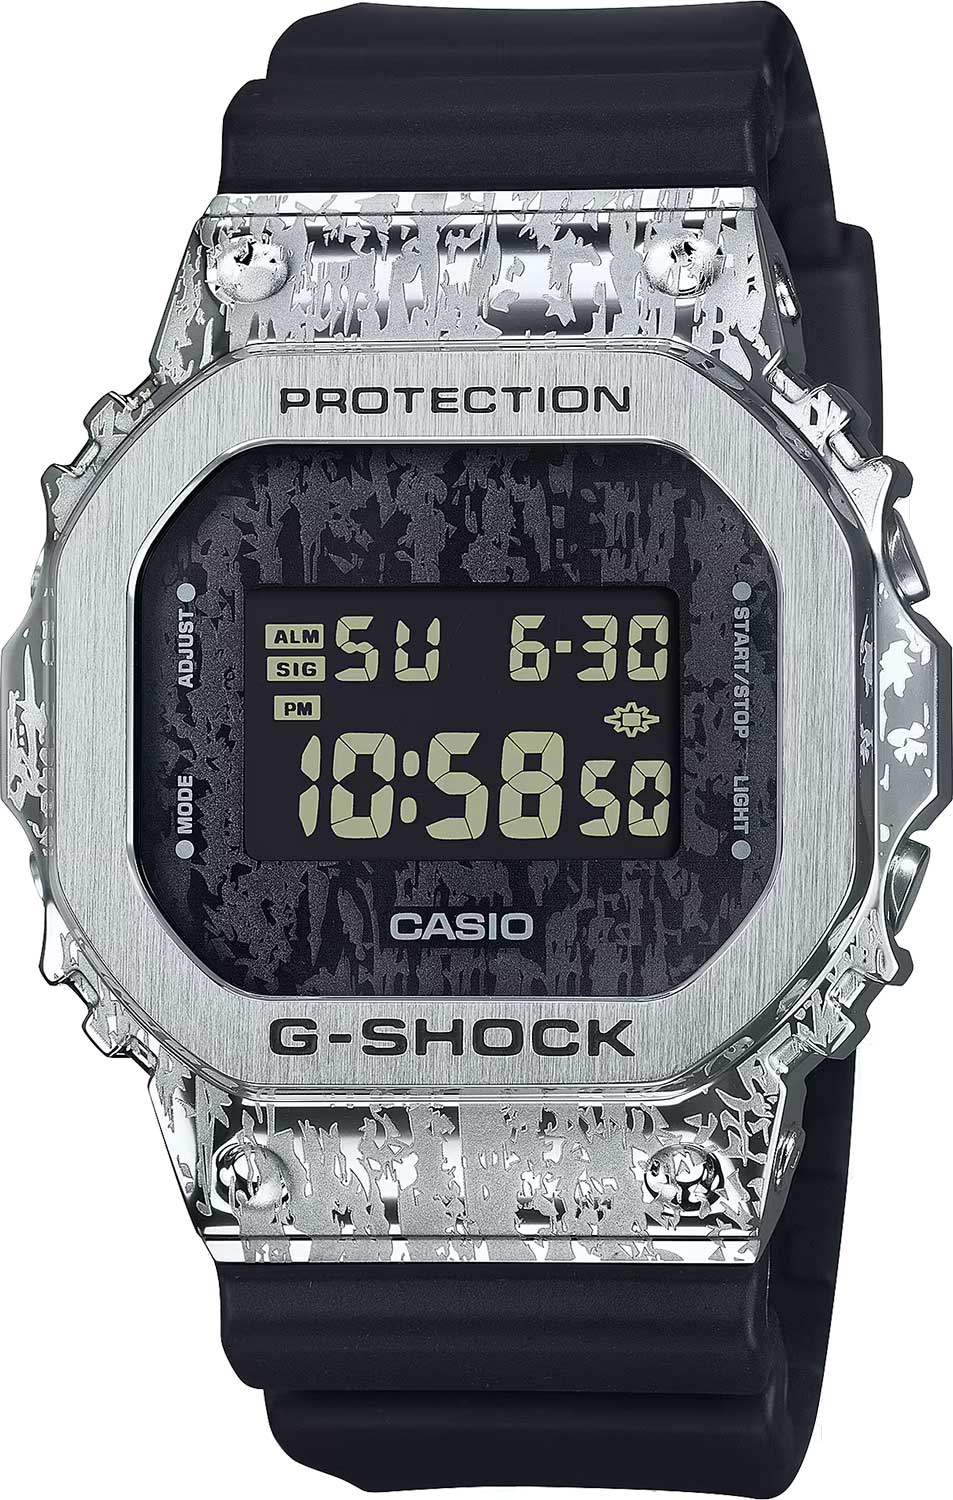    Casio G-SHOCK GM-5600GC-1  